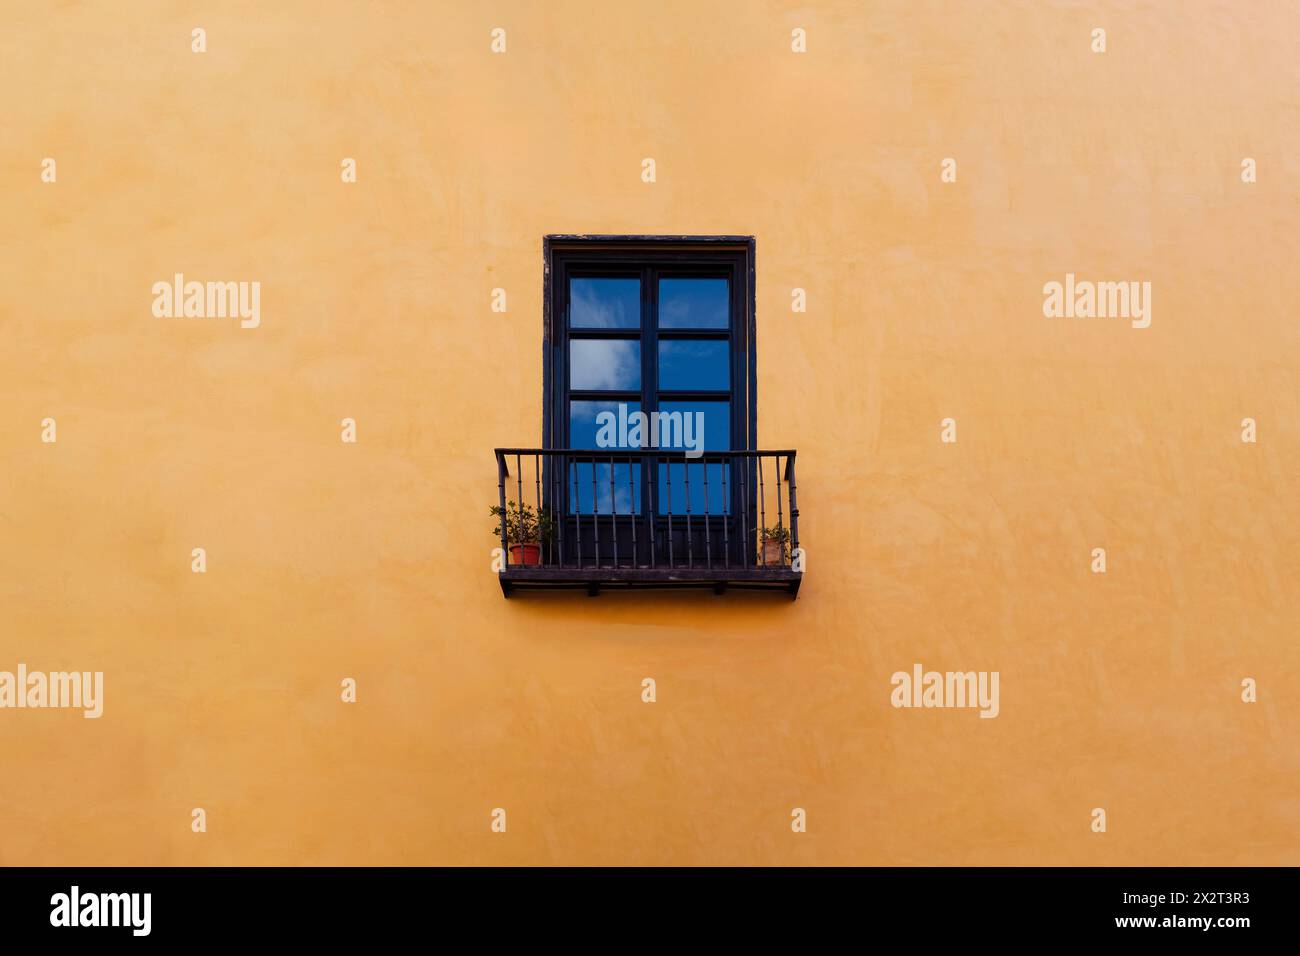 Empty window with balcony on yellow wall Stock Photo